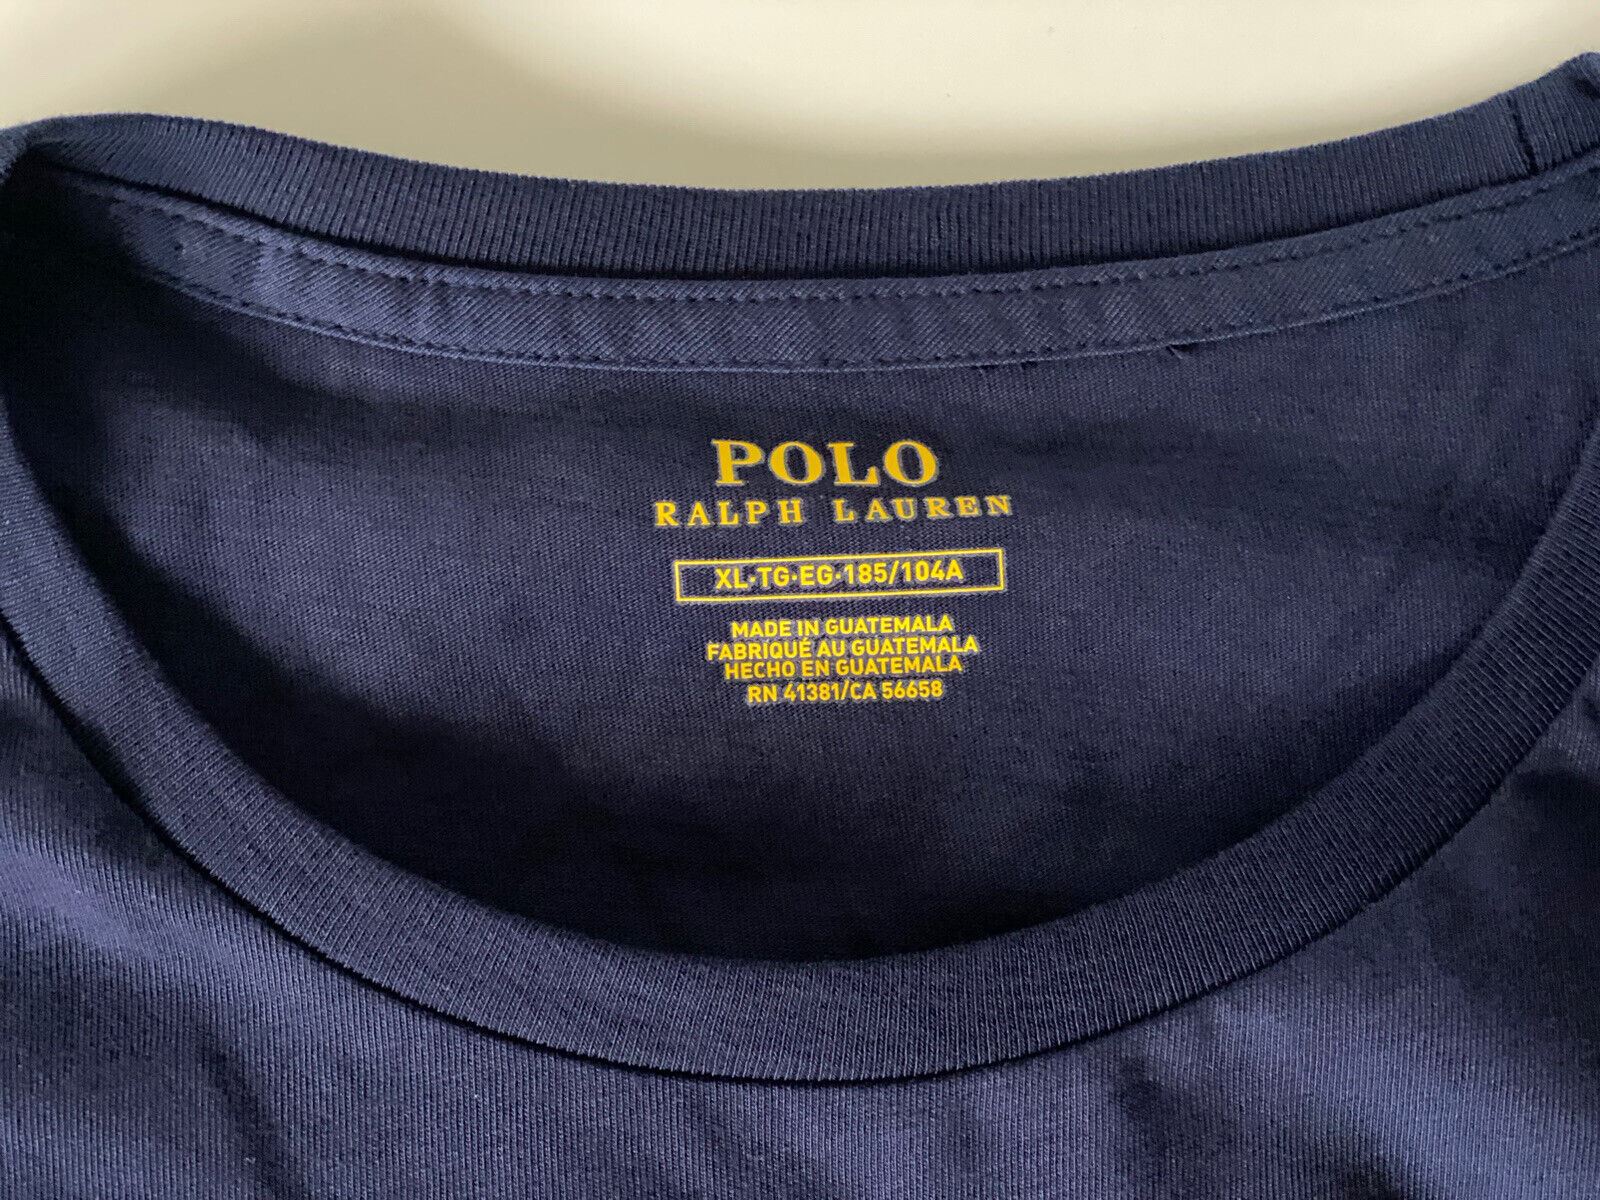 Neu mit Etikett: Polo Ralph Lauren Kurzarm-T-Shirt mit Logo, Blau, XL 